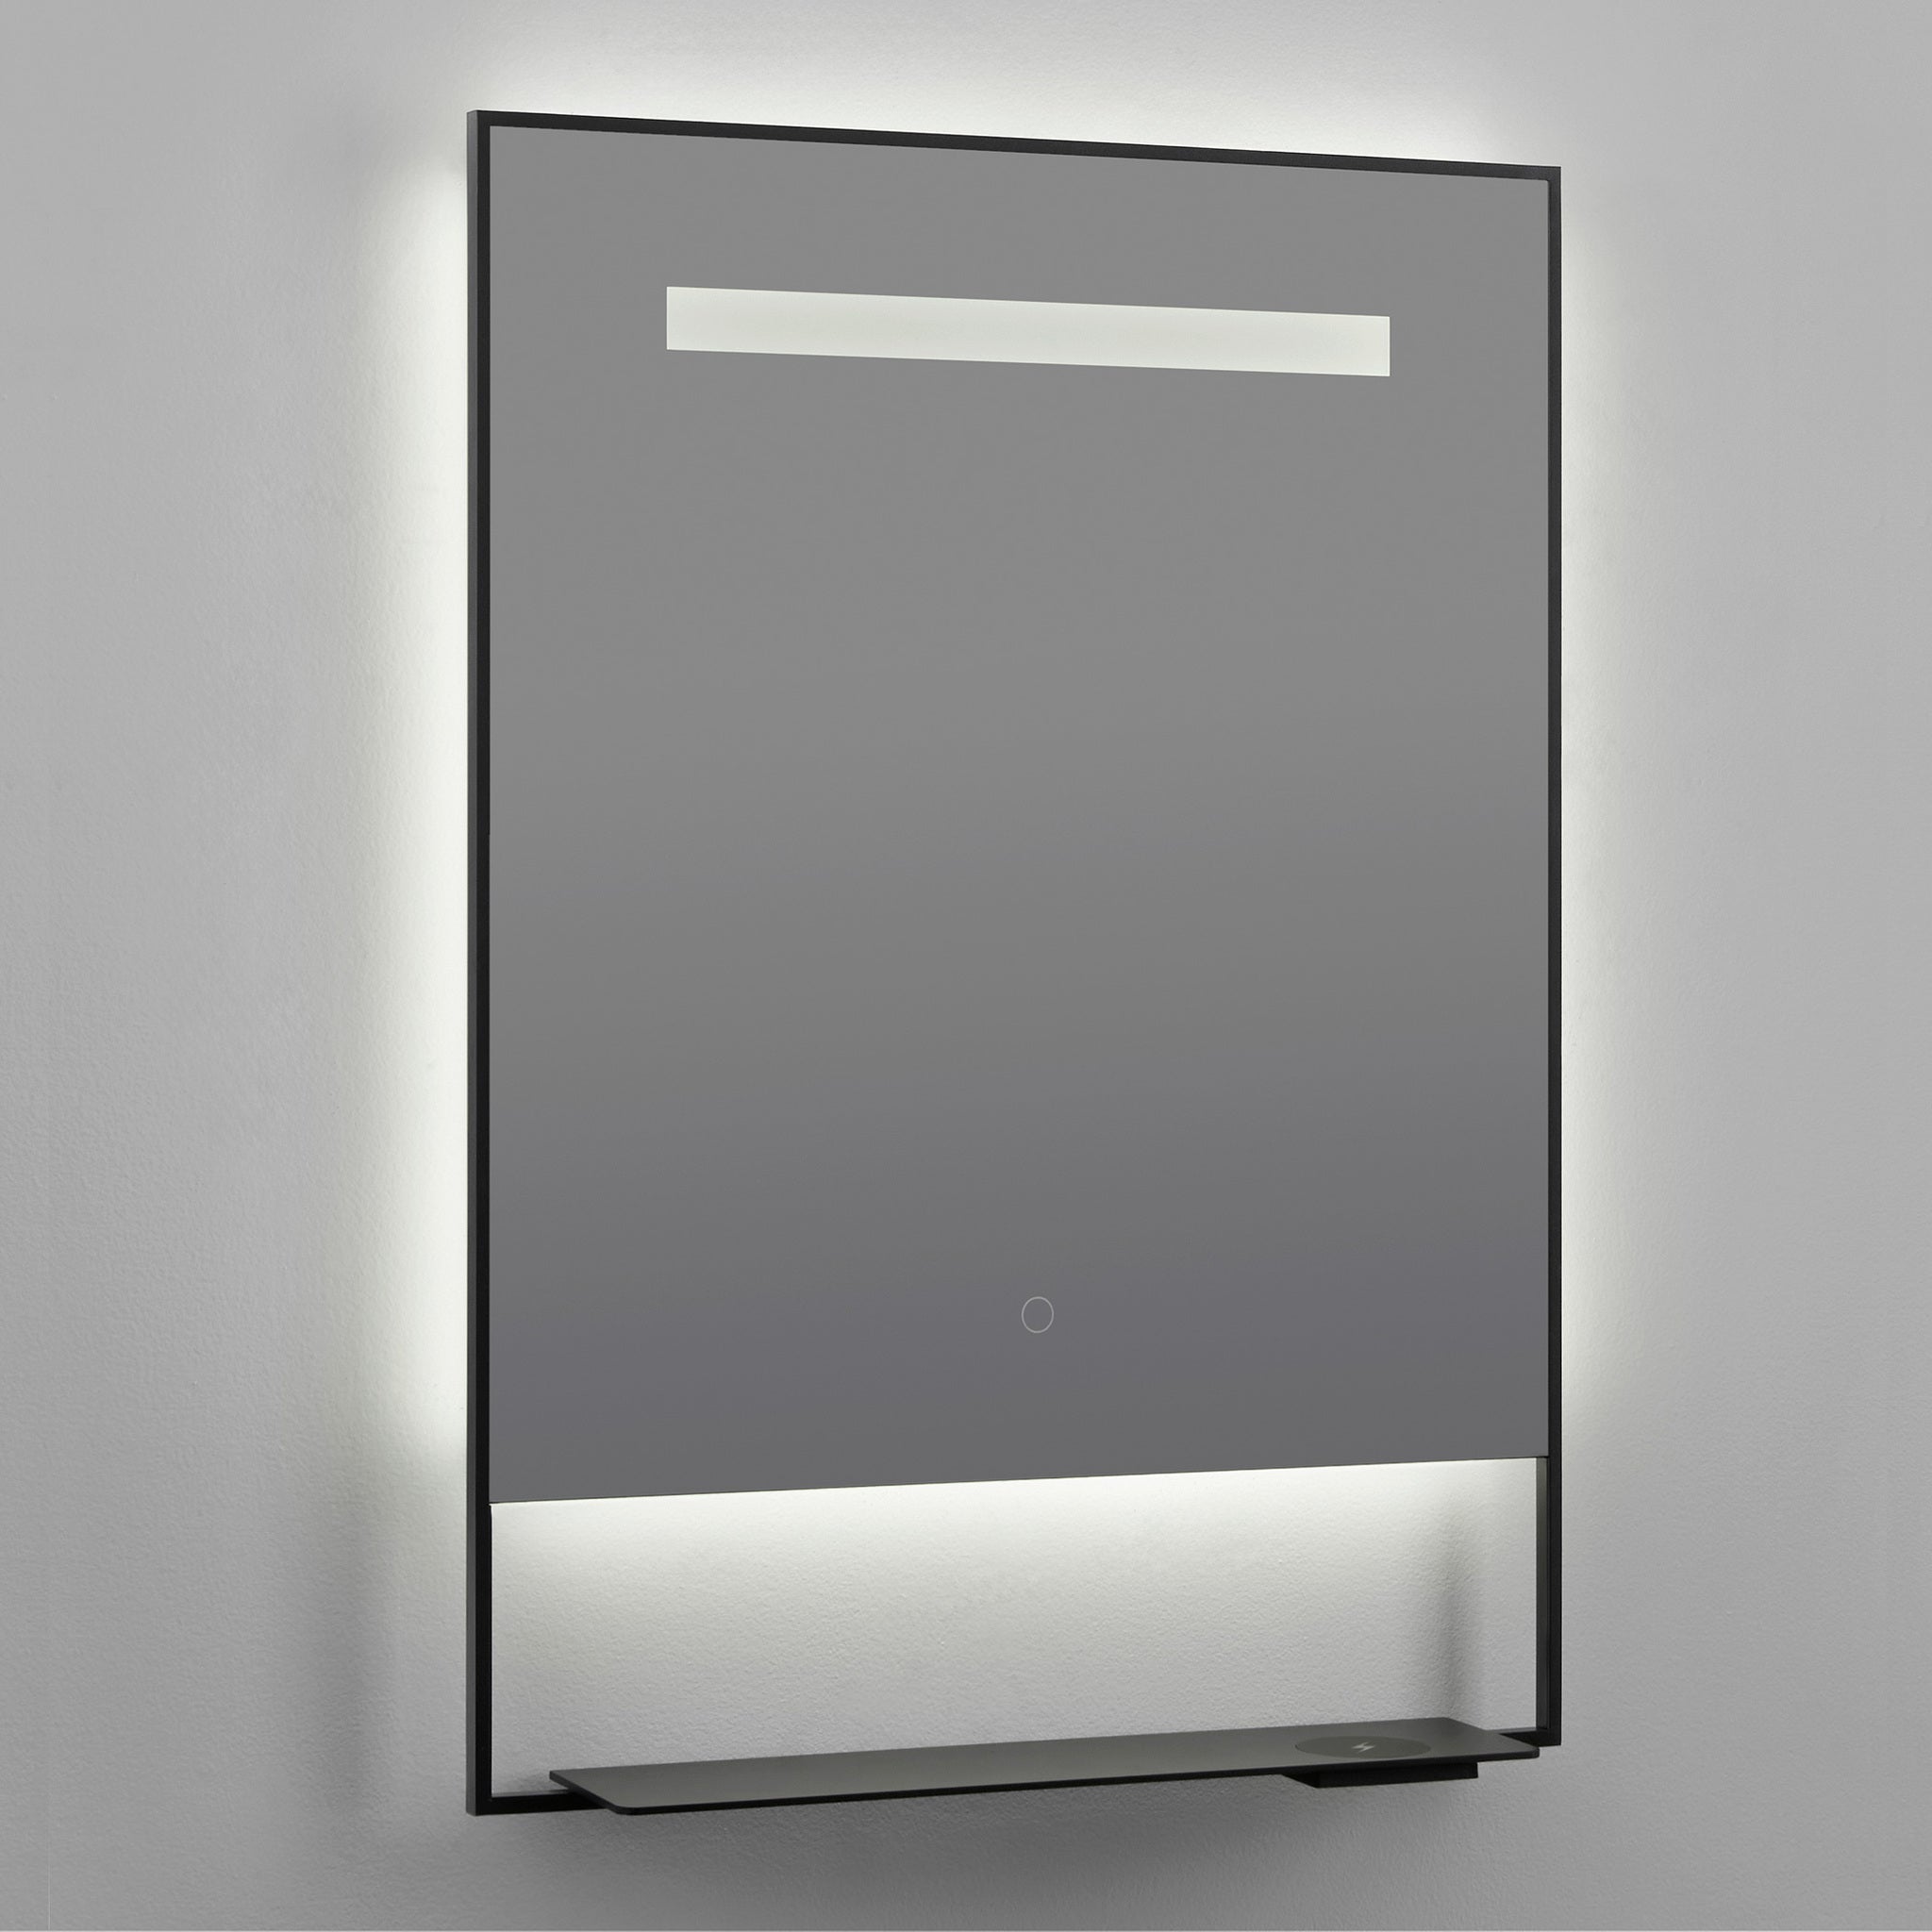 Oxygen Castore 3-0901-15 Bathroom Vanity Lighted LED Mirror - Black